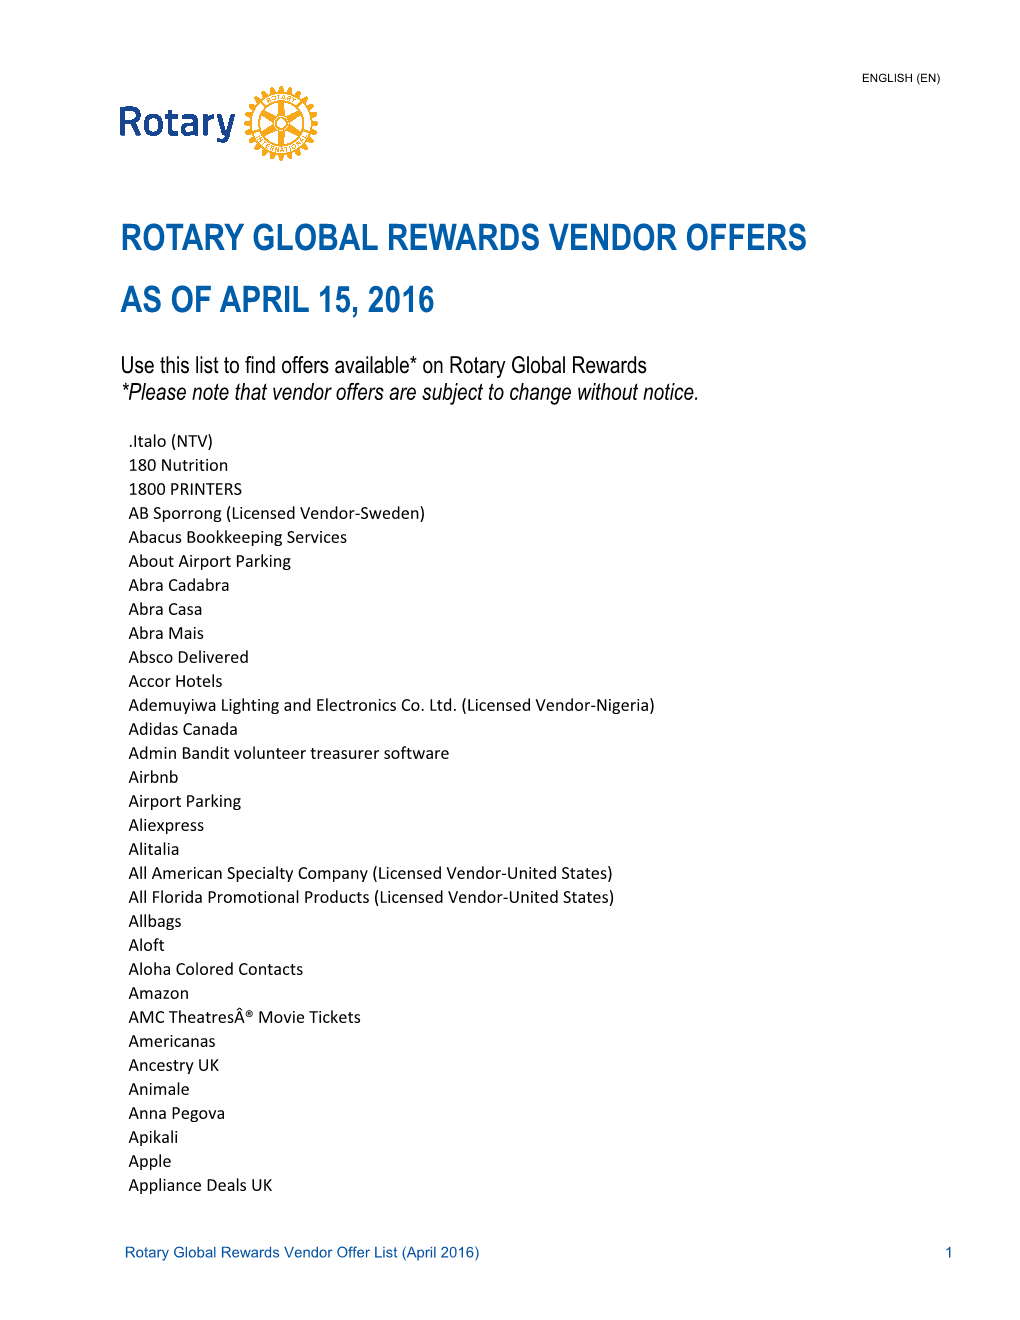 Rotary Global Rewards Vendor List Apr2016 EN